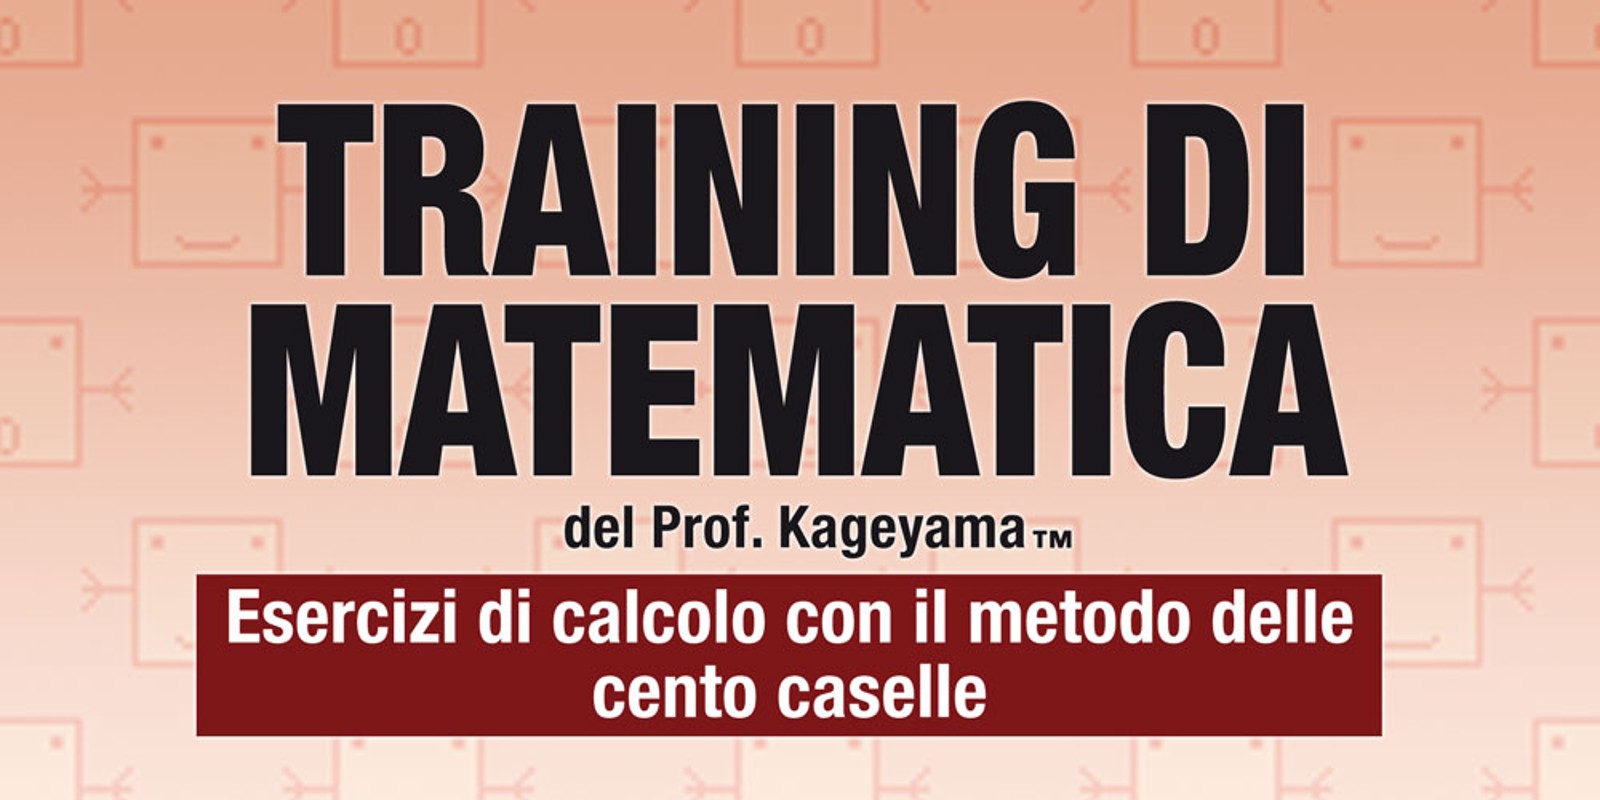 Training di Matematica del Prof. Kageyama